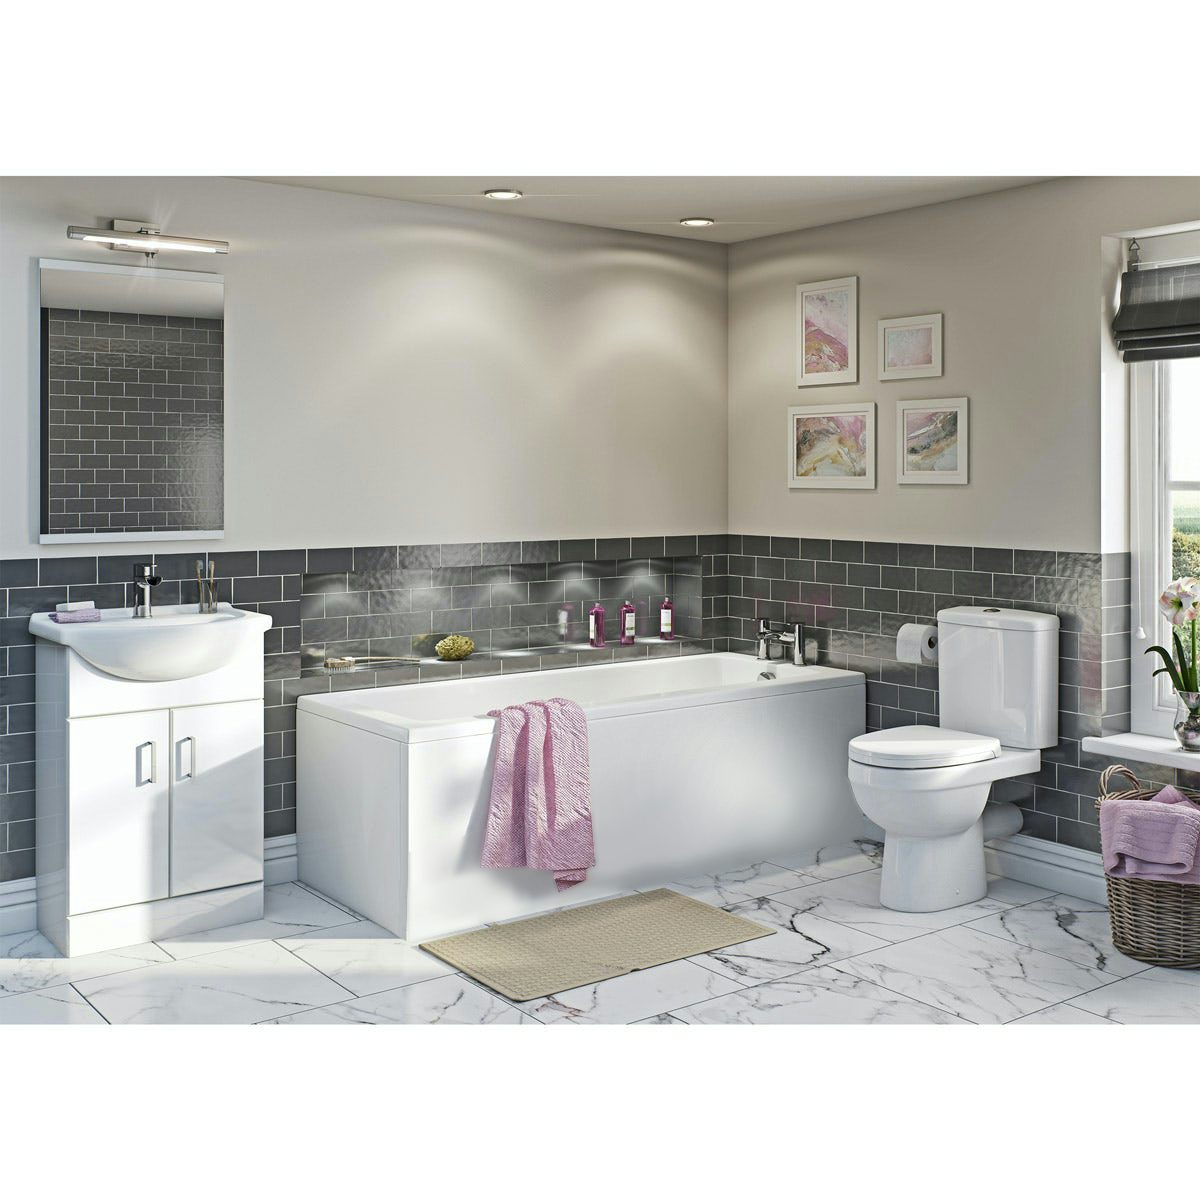 Orchard Eden white vanity bathroom suite with straight bath 1800 x 800